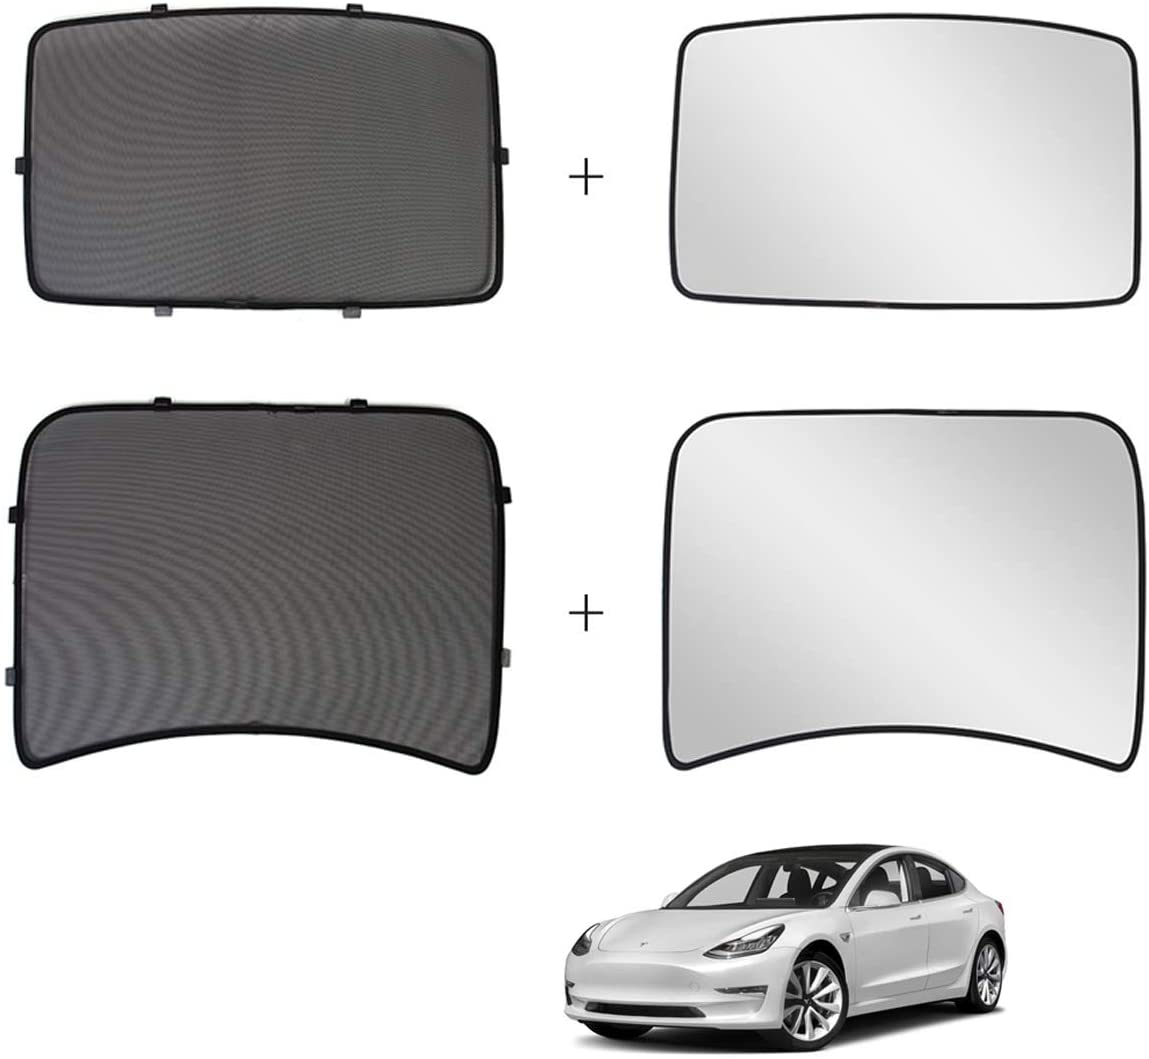 Tesla Model 3 Glass Roof Sunshade – TESLARATI Marketplace